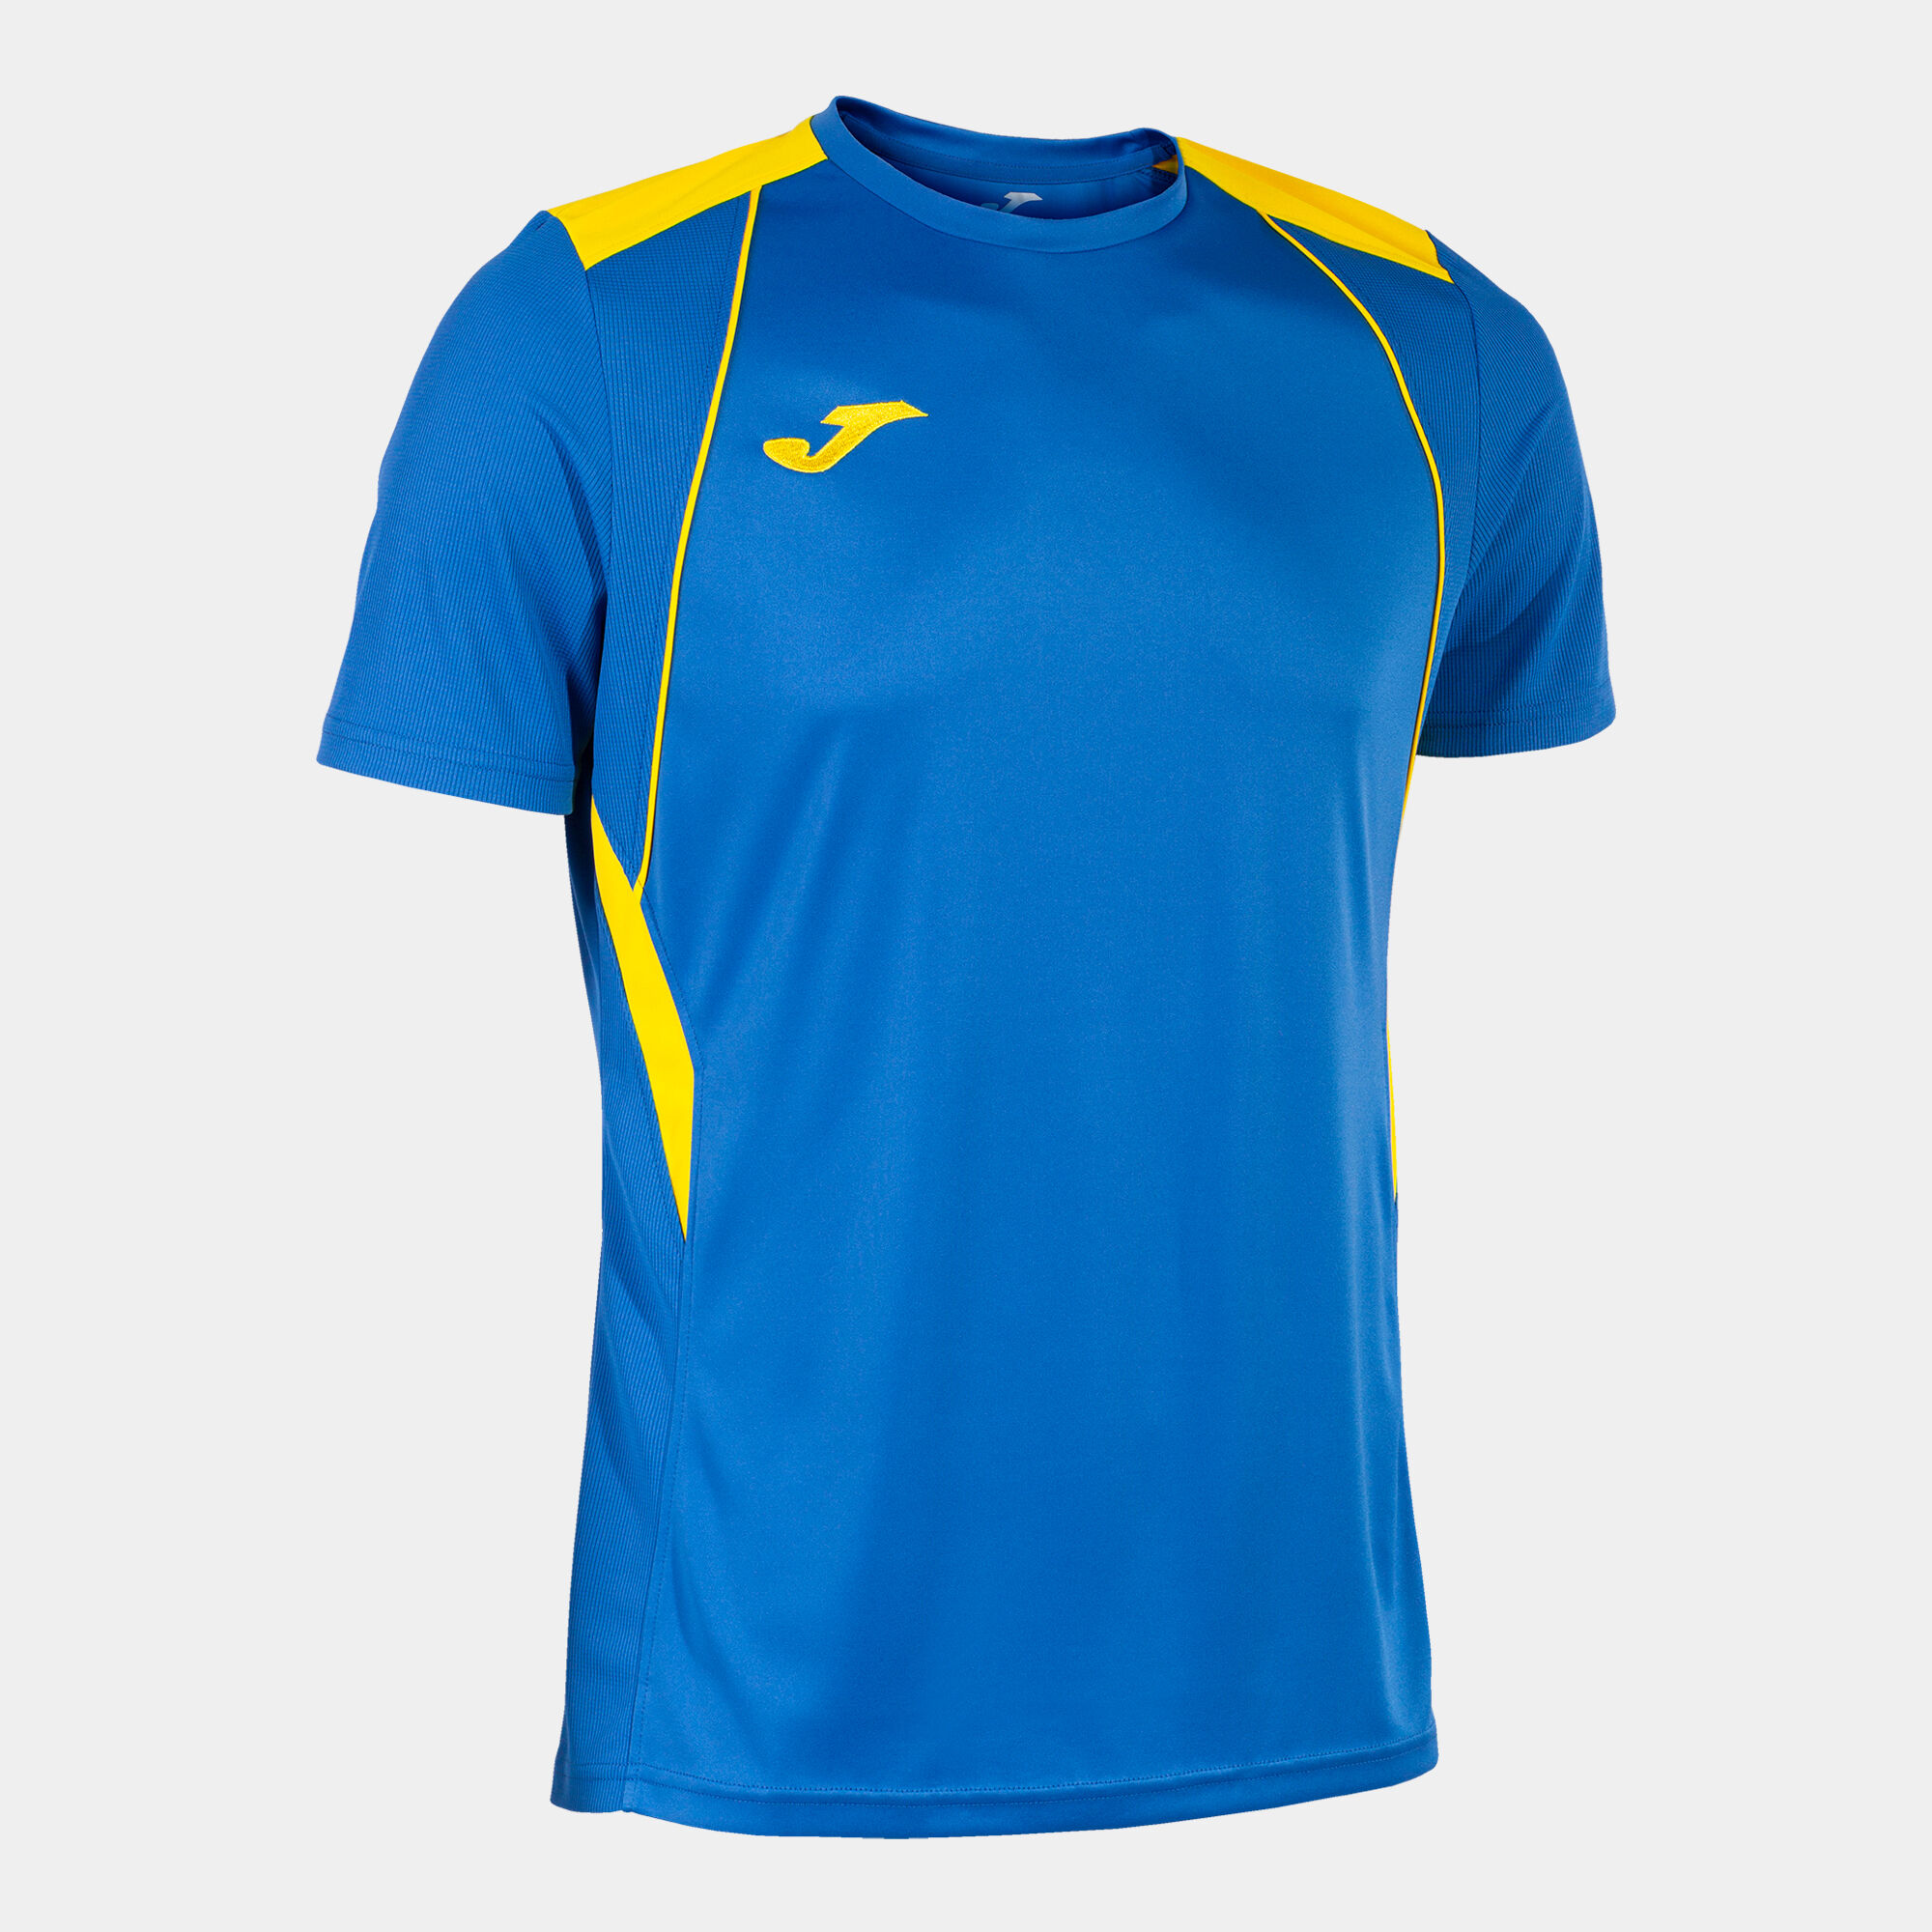 Shirt short sleeve man Championship VII royal blue yellow